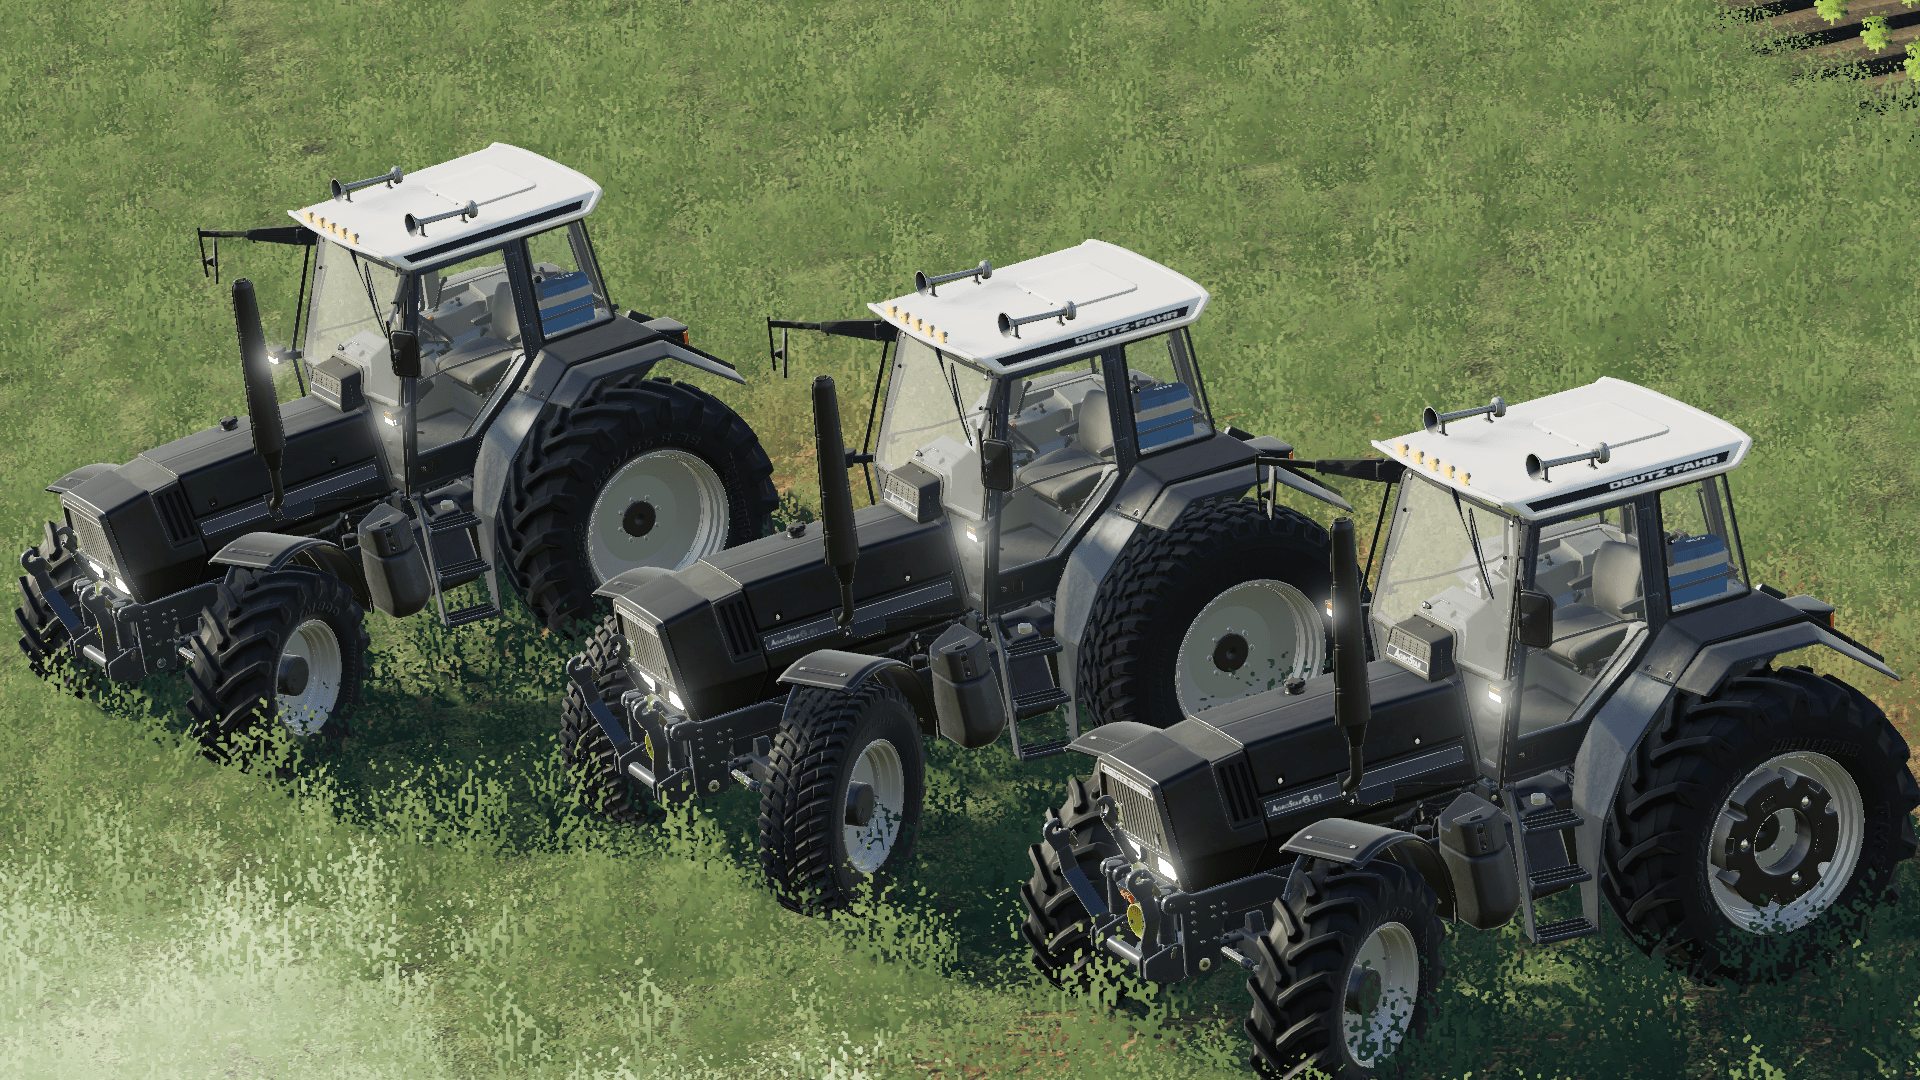 Black Deutz Agrostar 661 Tractor V10 Fs19 Farming Simulator 22 Mod Images And Photos Finder 6731